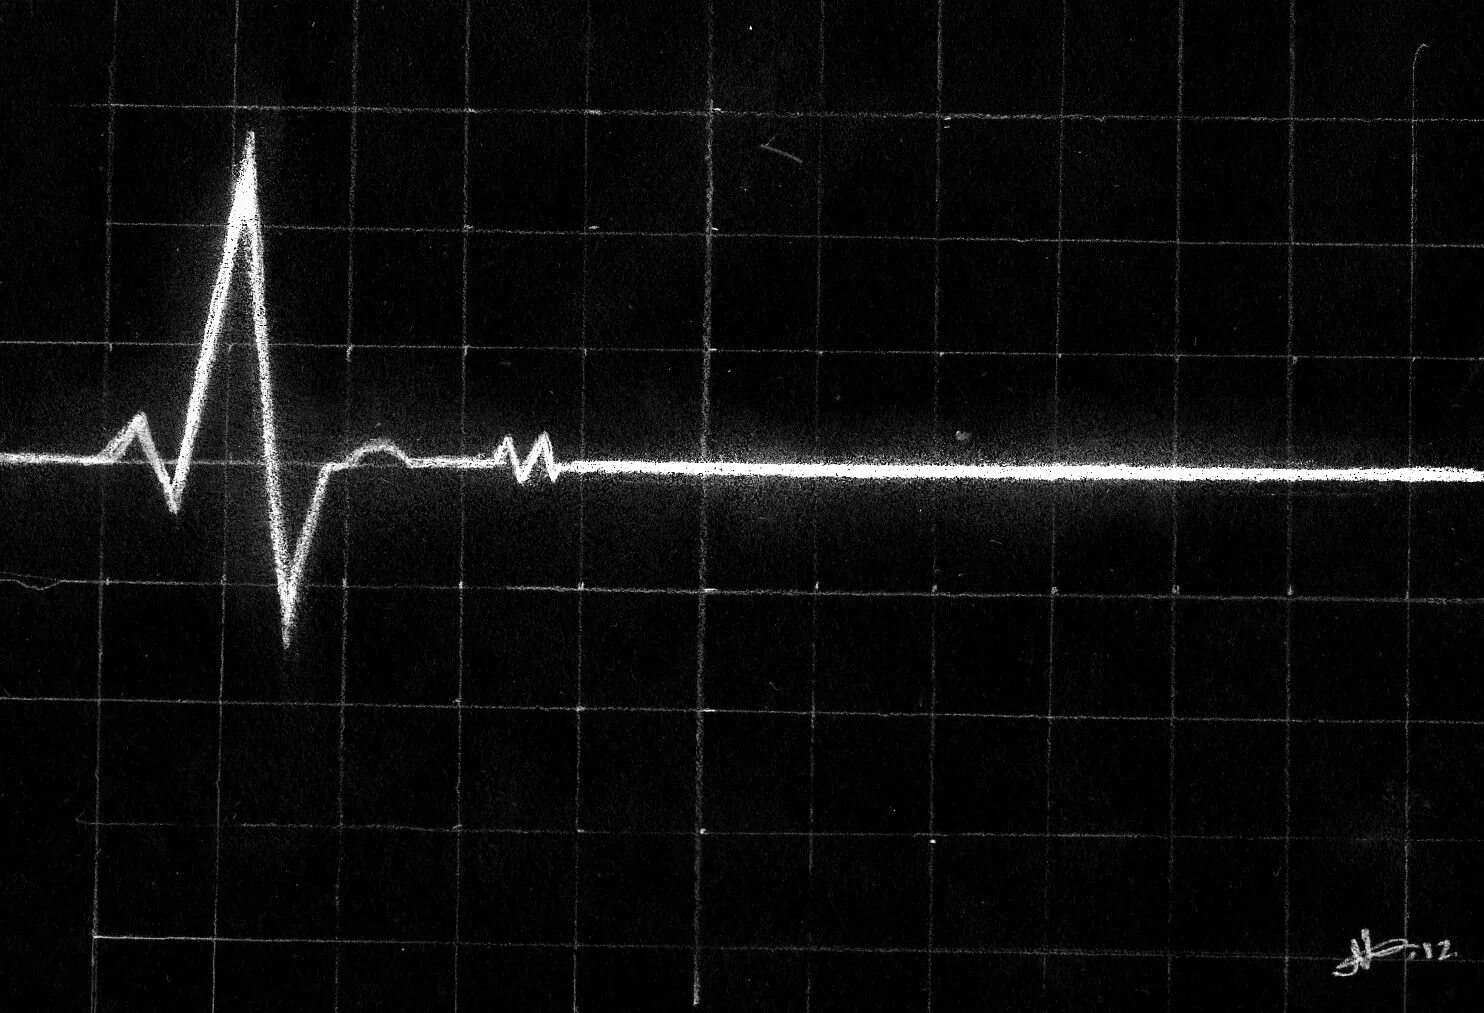 Пульс на лбу. Кардиограмма остановки сердца. Линия биения сердца. Прямая линия на кардиограмме. Сердце остановилось.